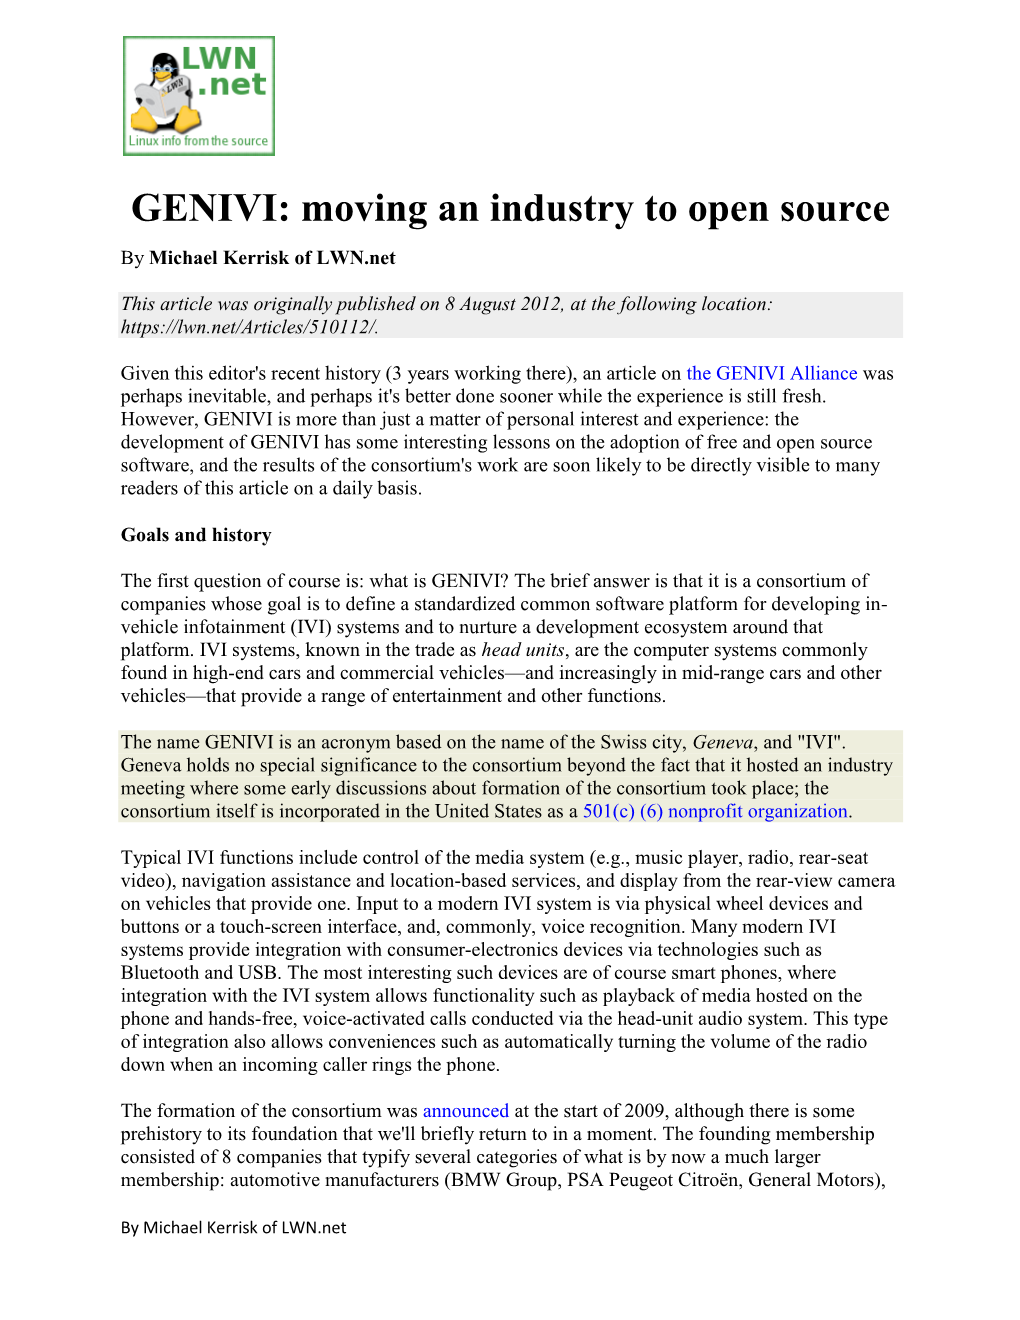 GENIVI: Moving an Industry to Open Source by Michael Kerrisk of LWN.Net